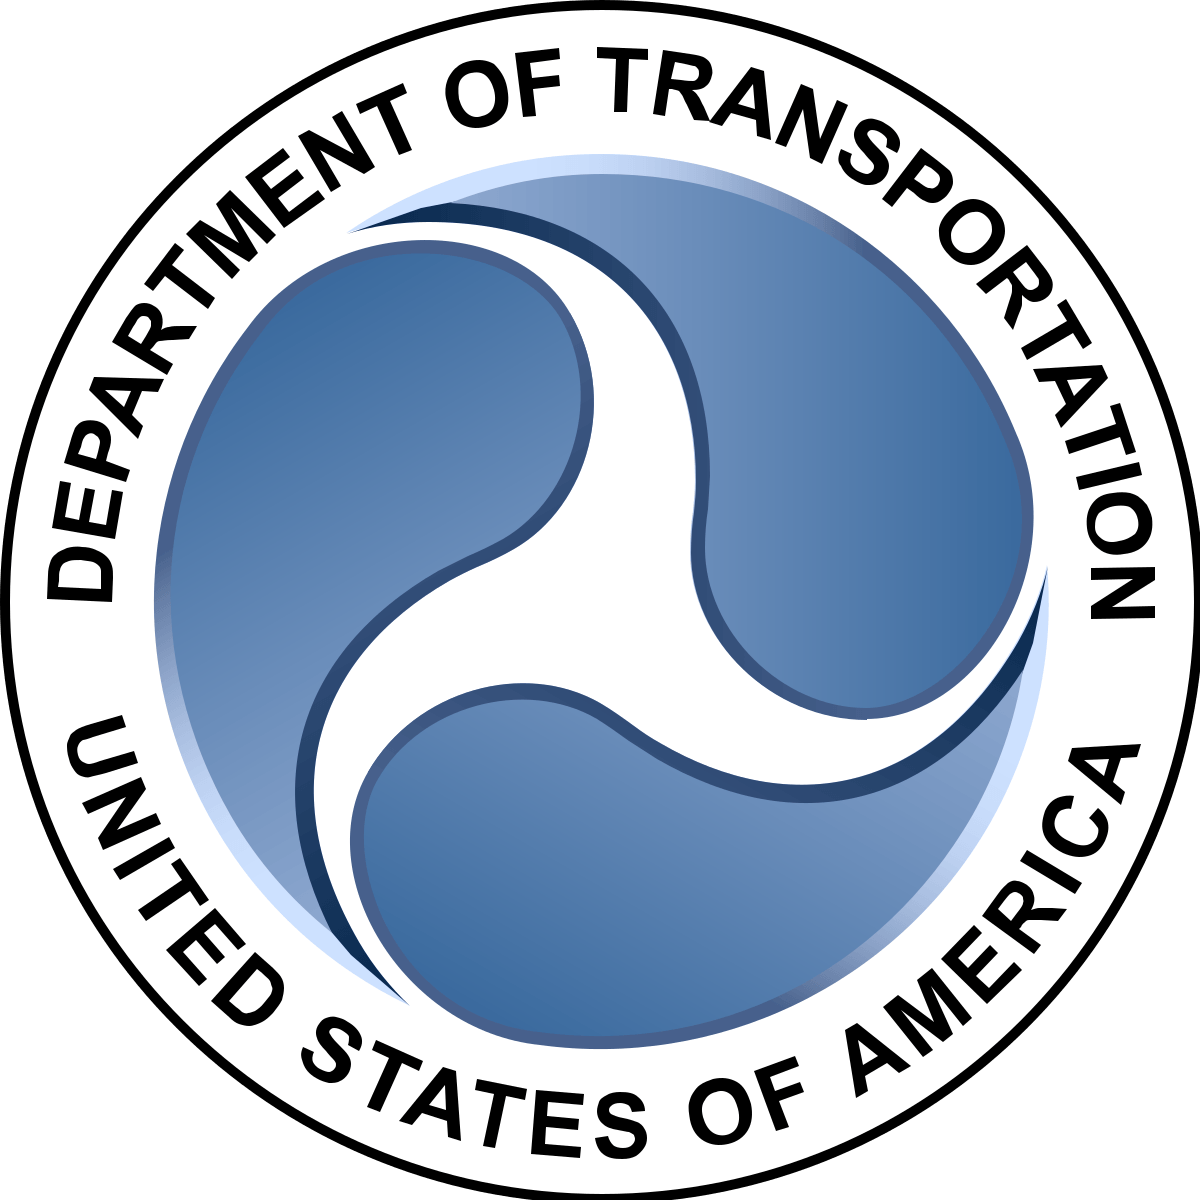 FHWA Logo - United States Department of Transportation